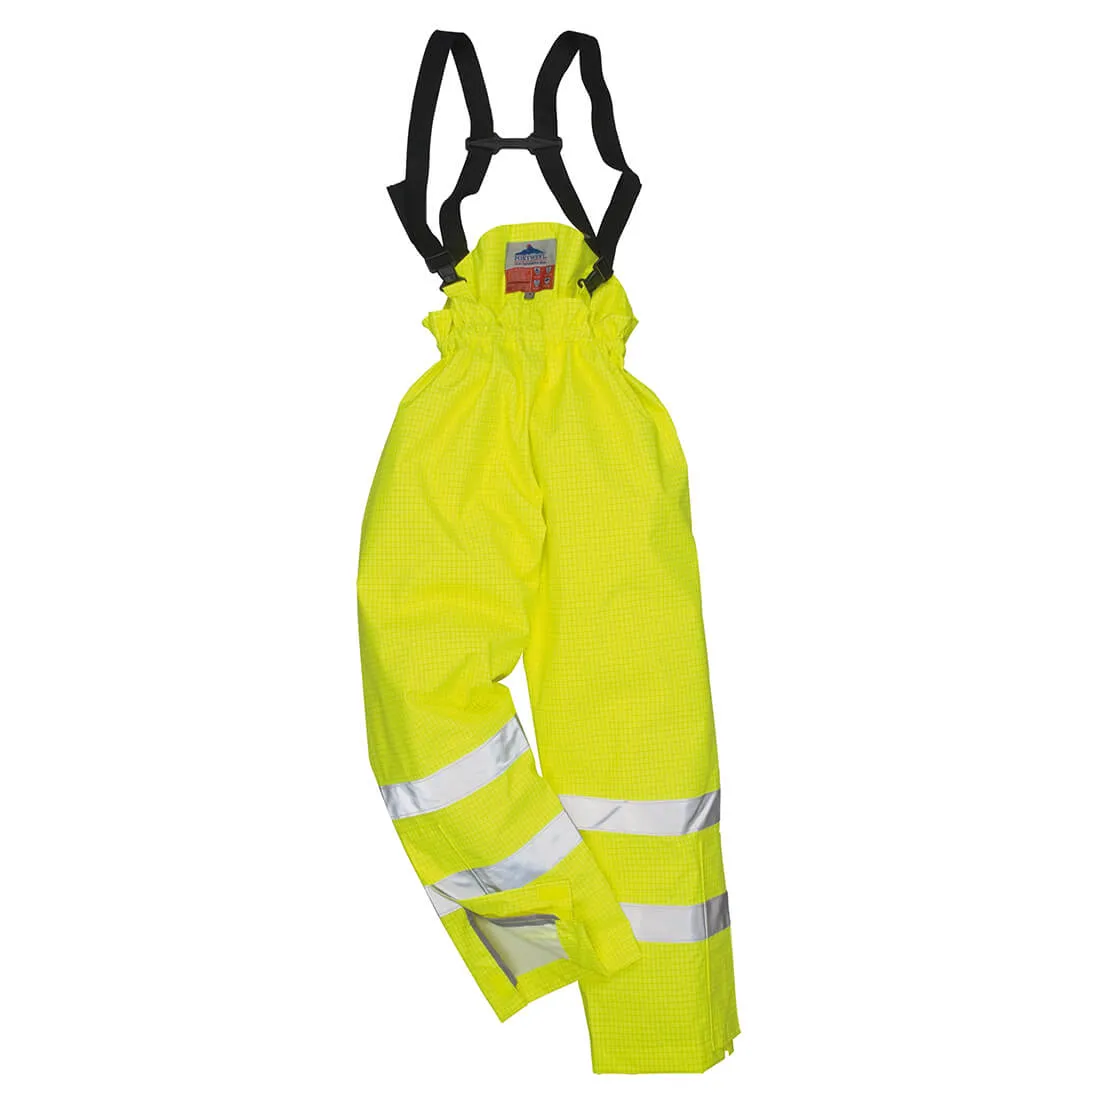 Biz Flame Hi Vis Flame Resistant Rain Unlined Trousers - Yellow, 4XL